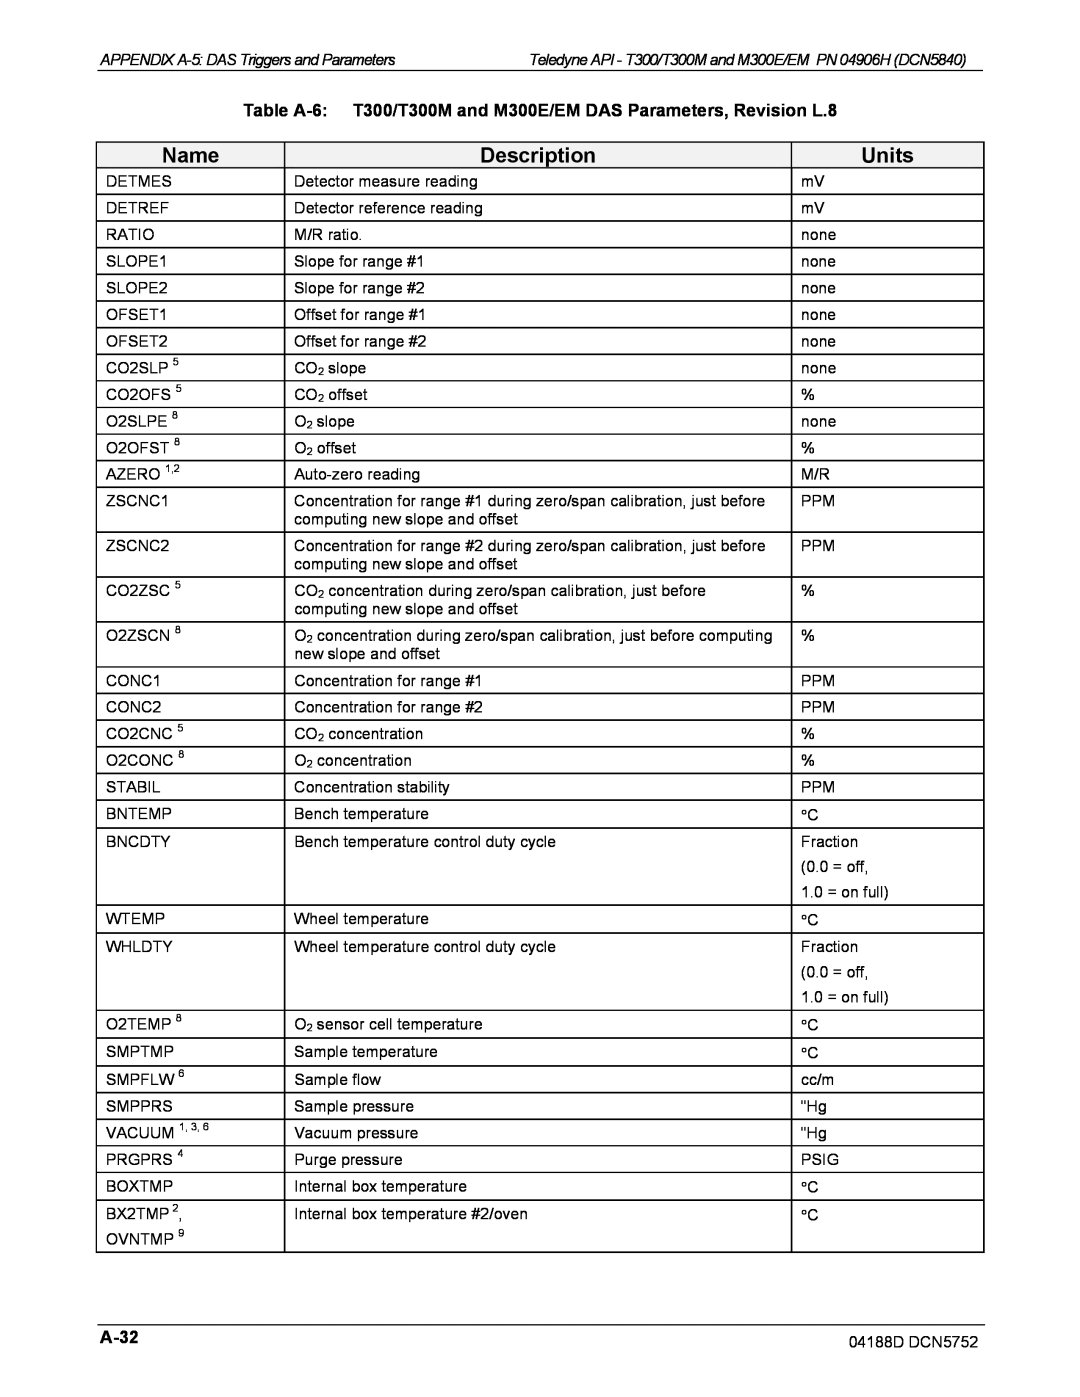 Teledyne M300EM operation manual Name, Description, Units, A-32 